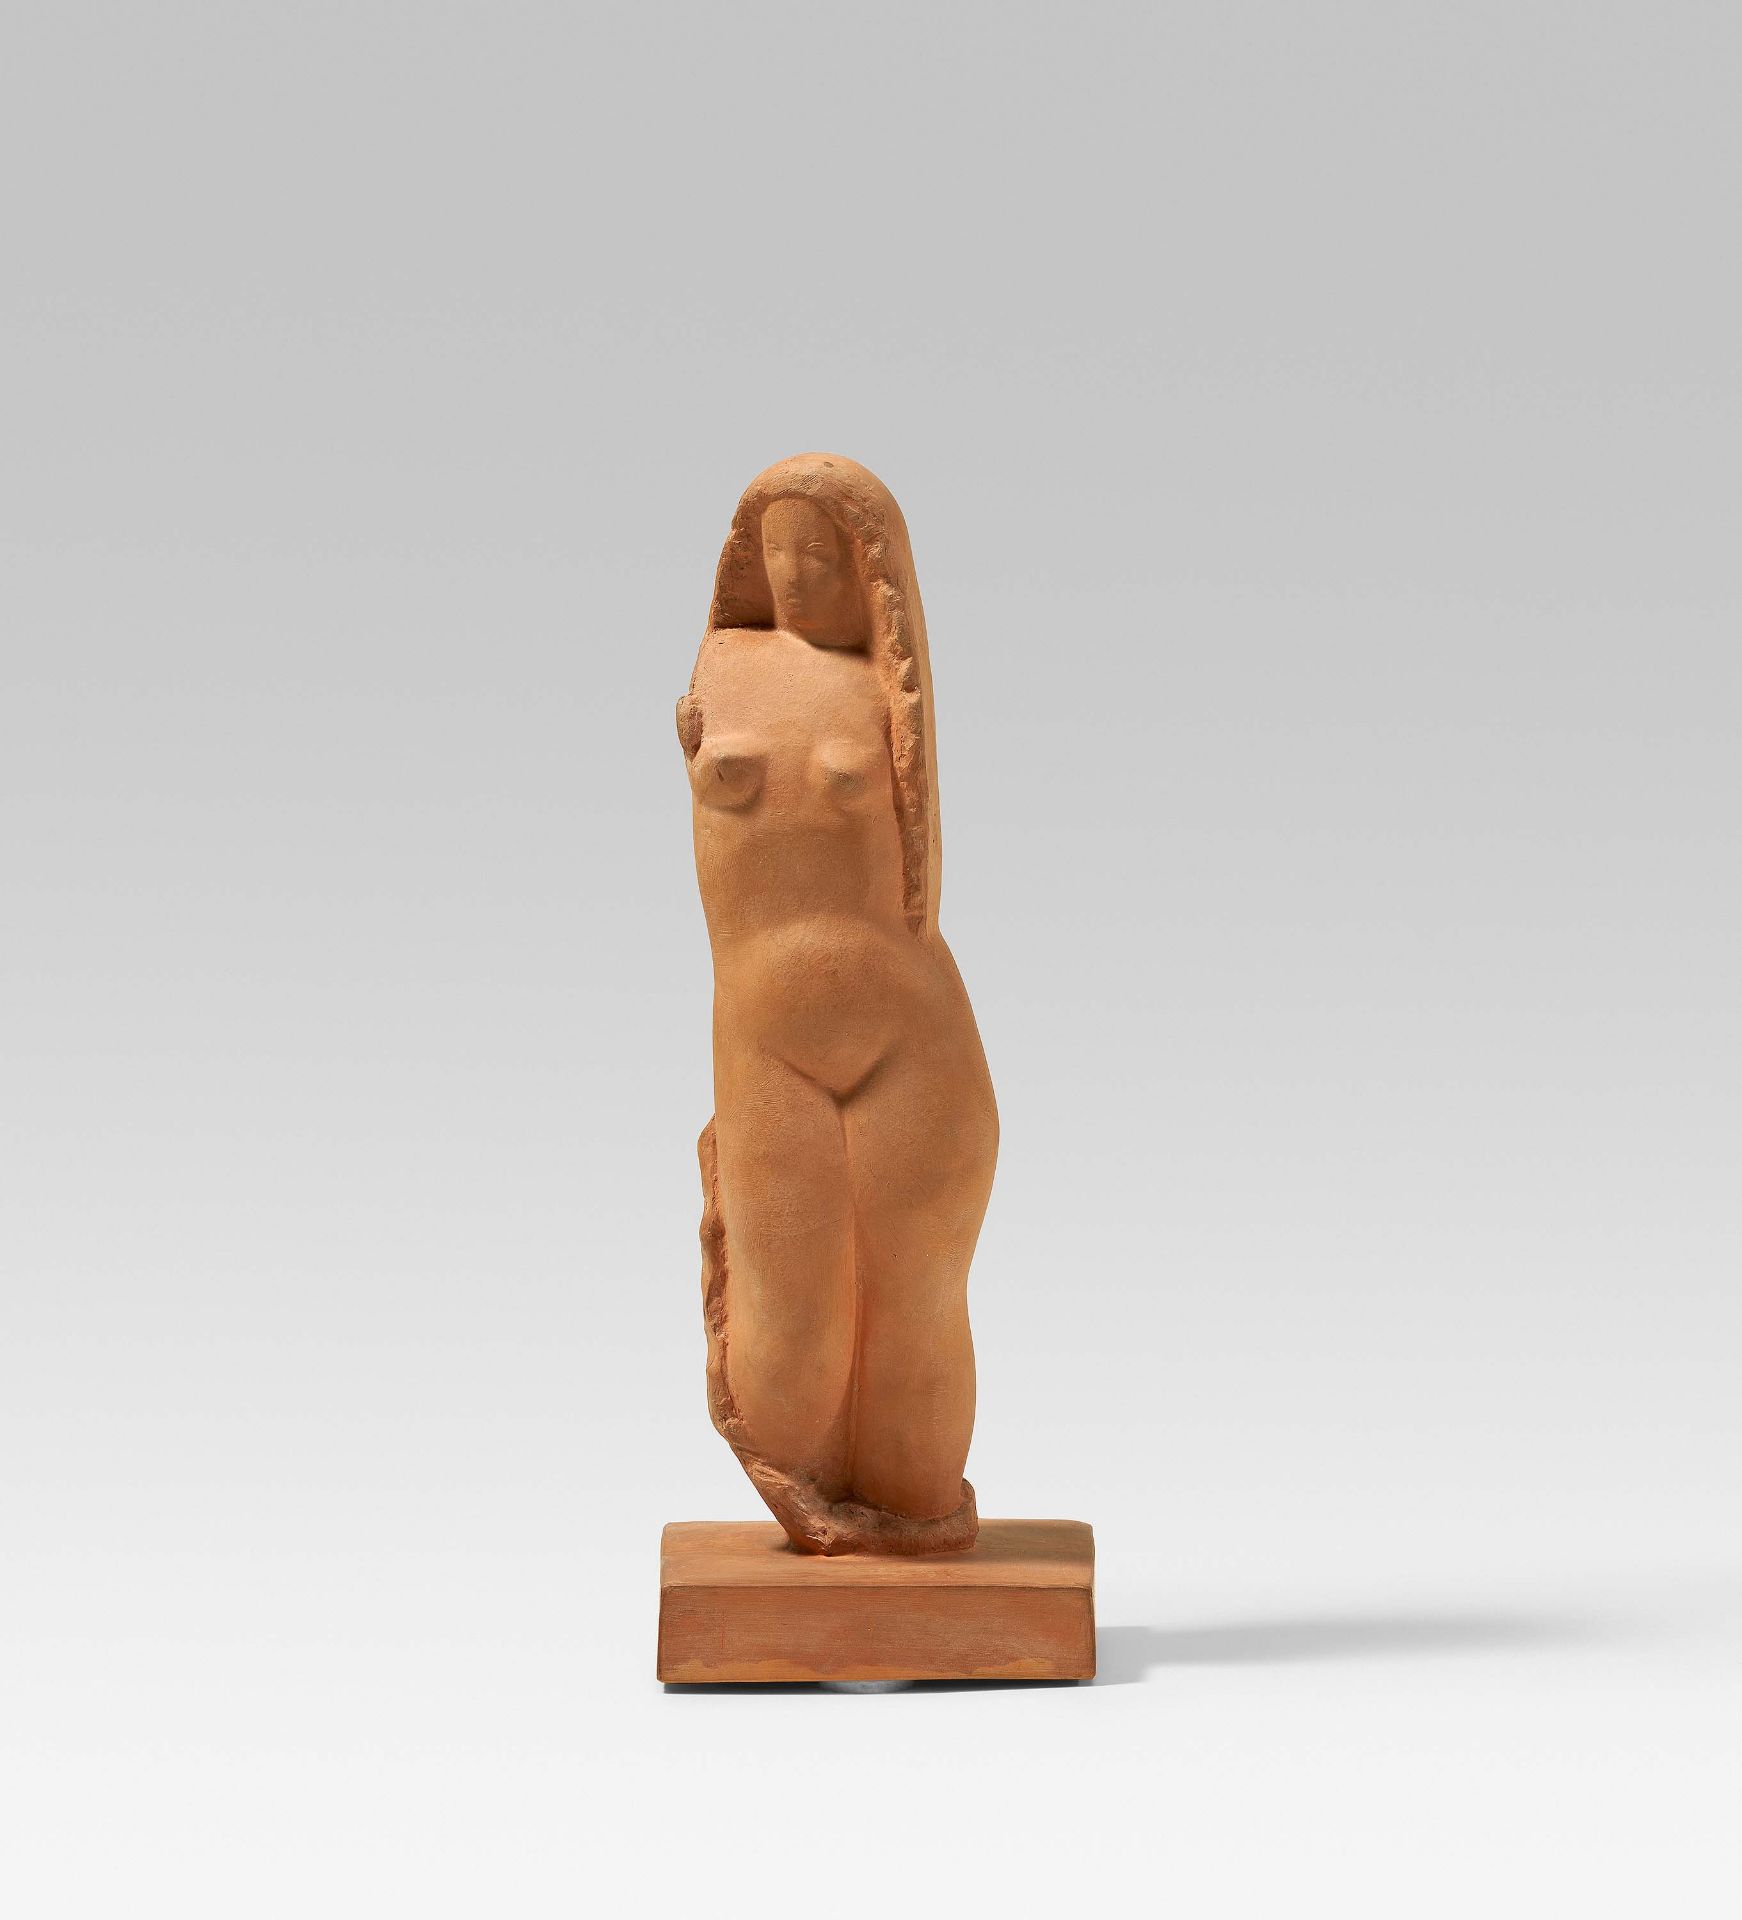 Joseph Csaky: Femme nue debout